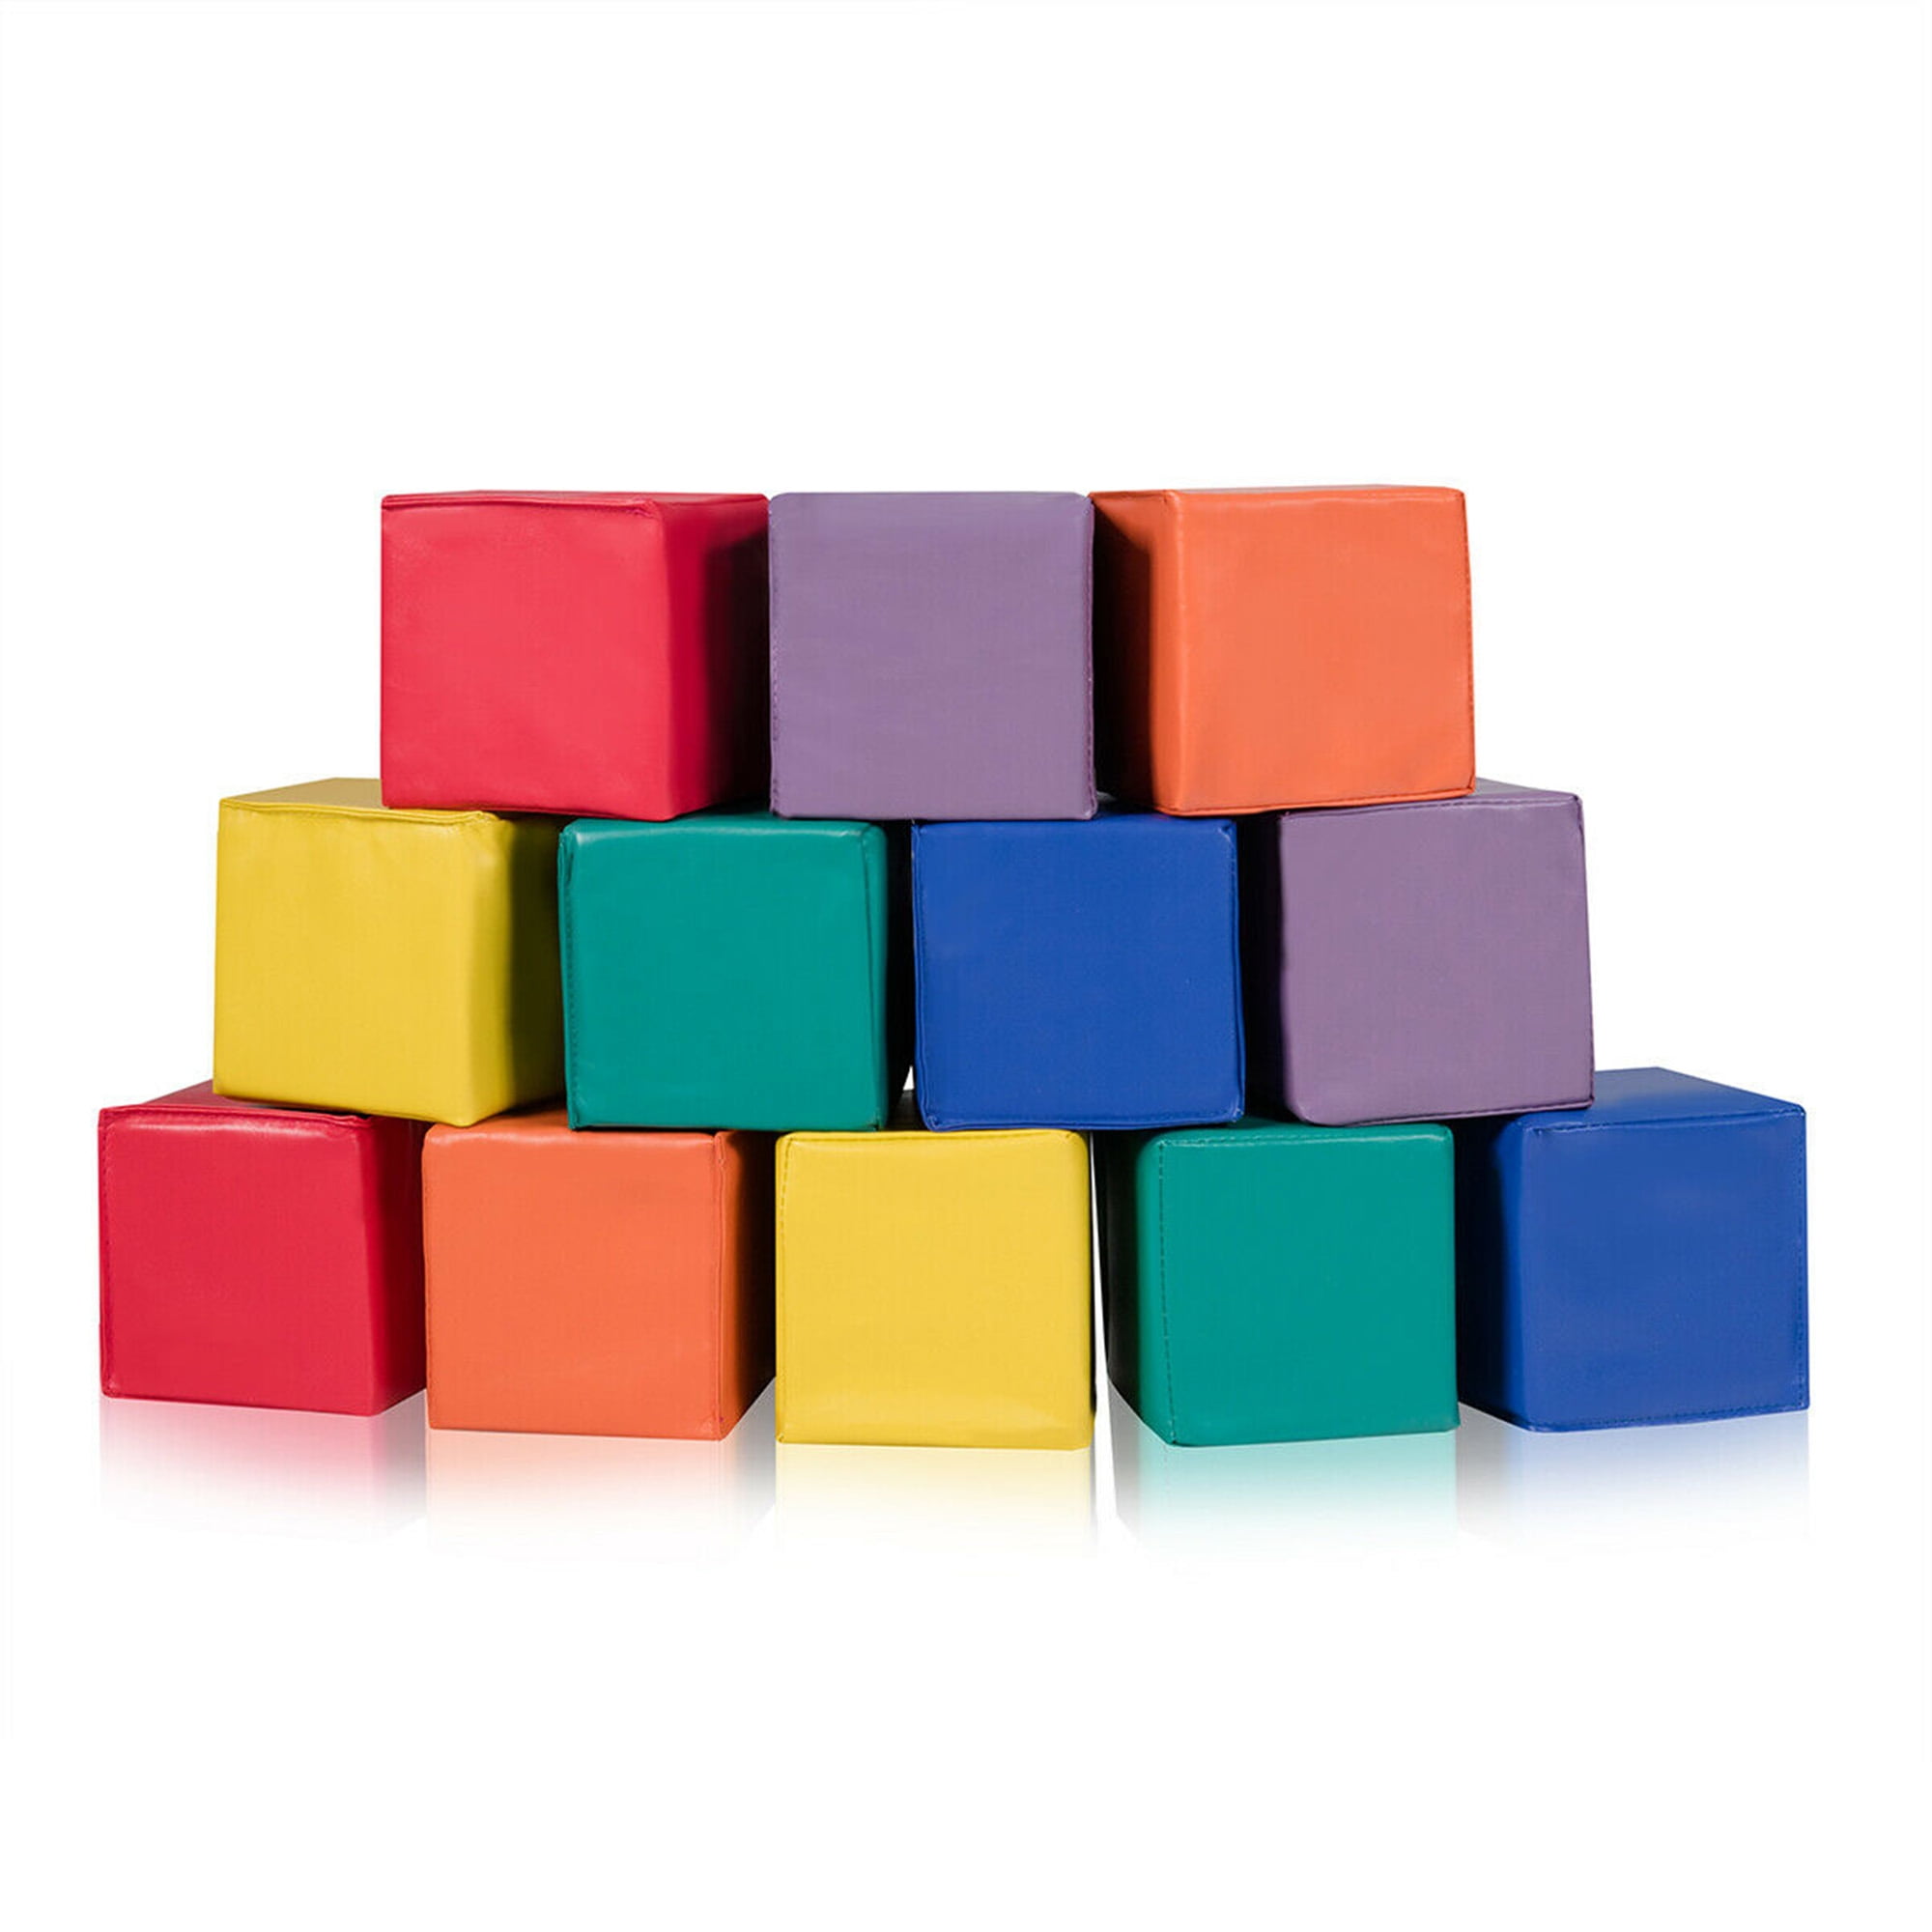 Multicolor Foam Building Block Soft Kids Playset, Daycare & Classroom  Activity, 1 Unit - Kroger